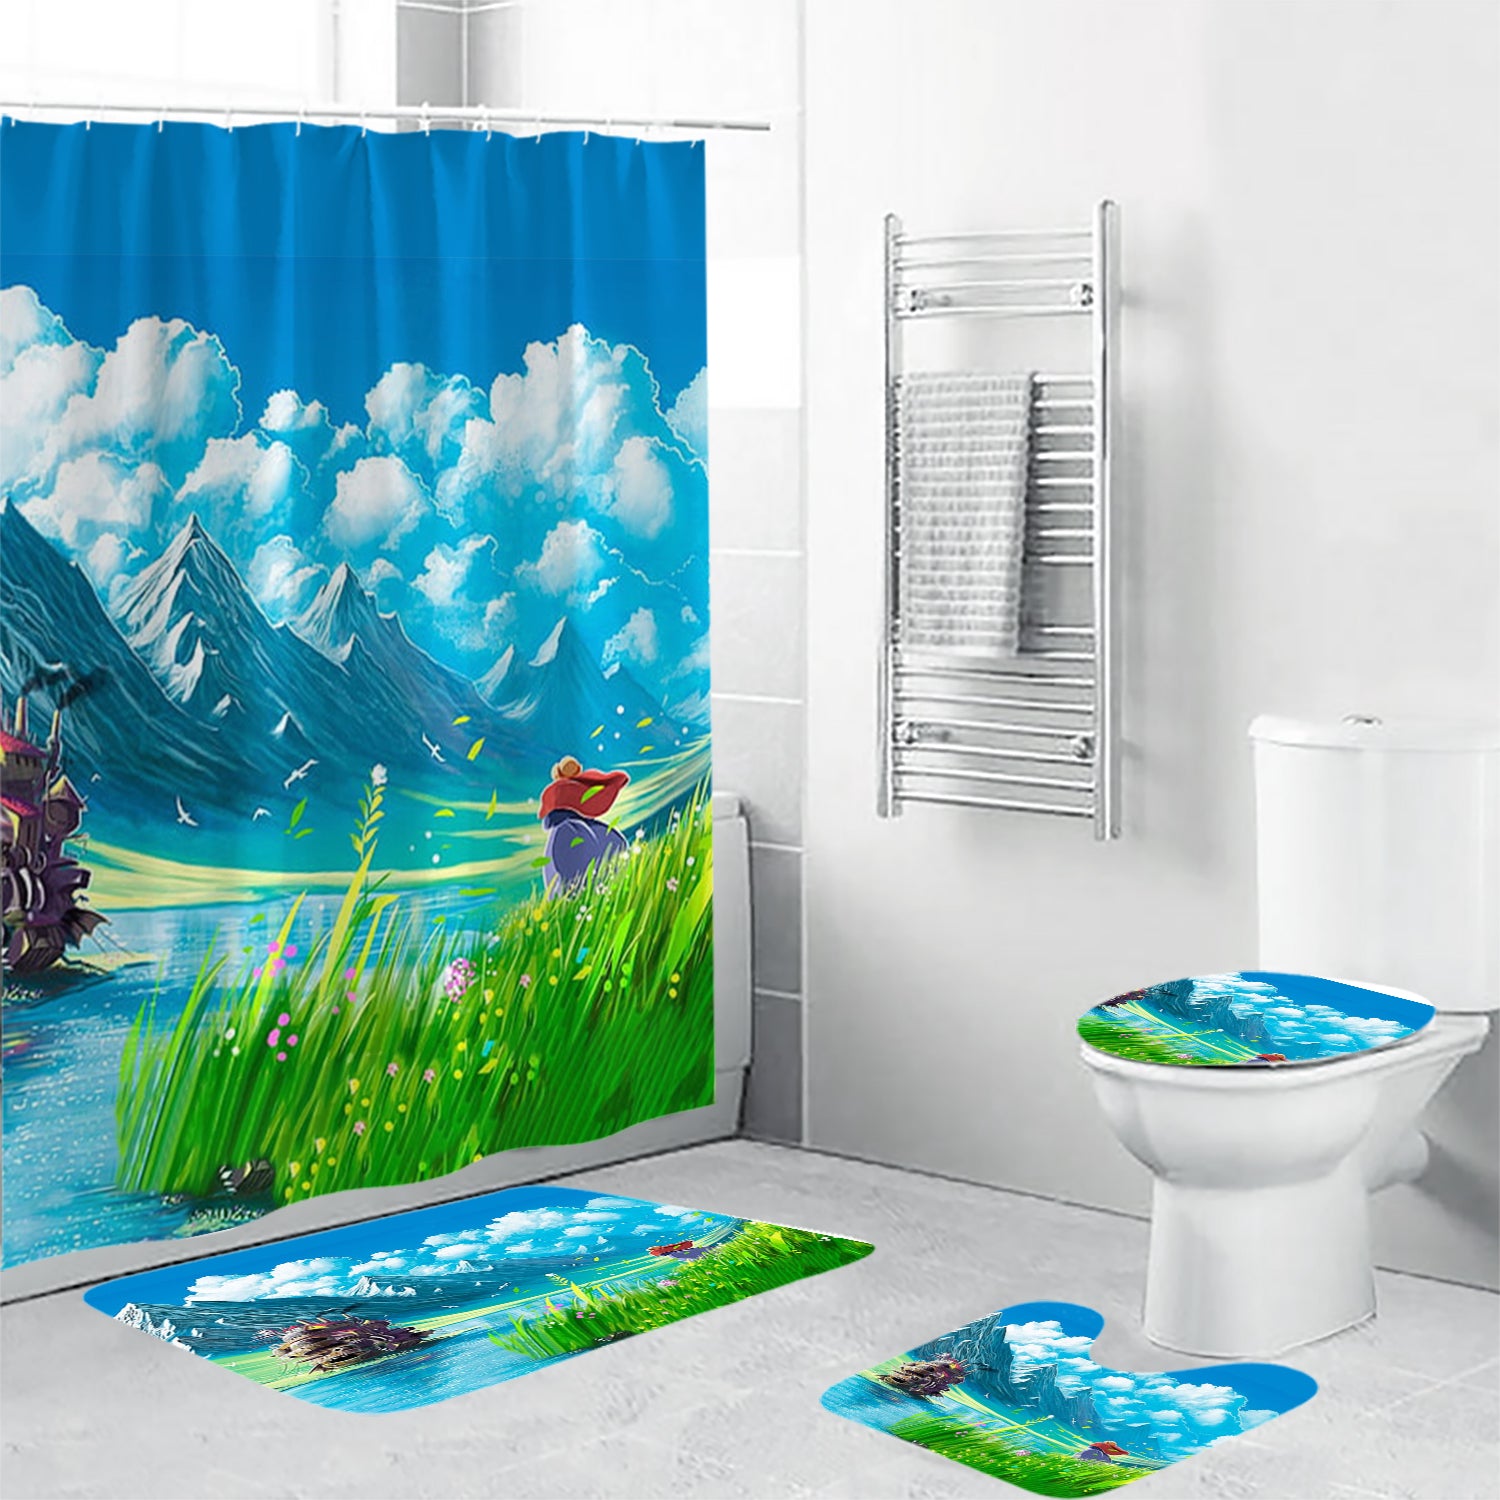 Howl's Moving Castle Poster 3 4PCS Shower Curtain Non-Slip Toilet Lid Cover Bath Mat - Bathroom Set Fans Gifts